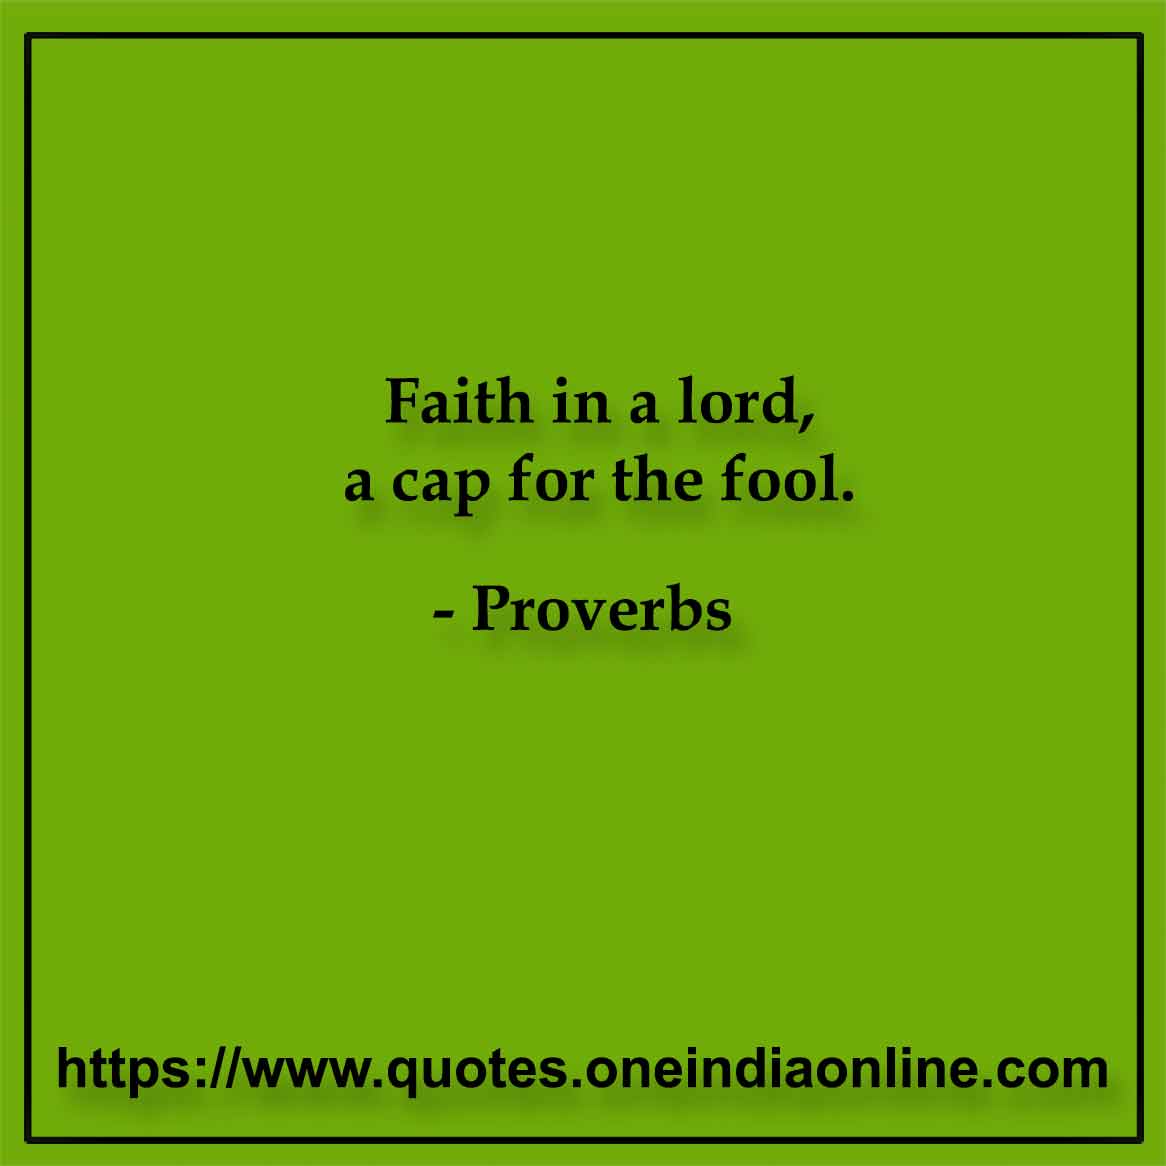 Faith in a lord, a cap for the fool.

